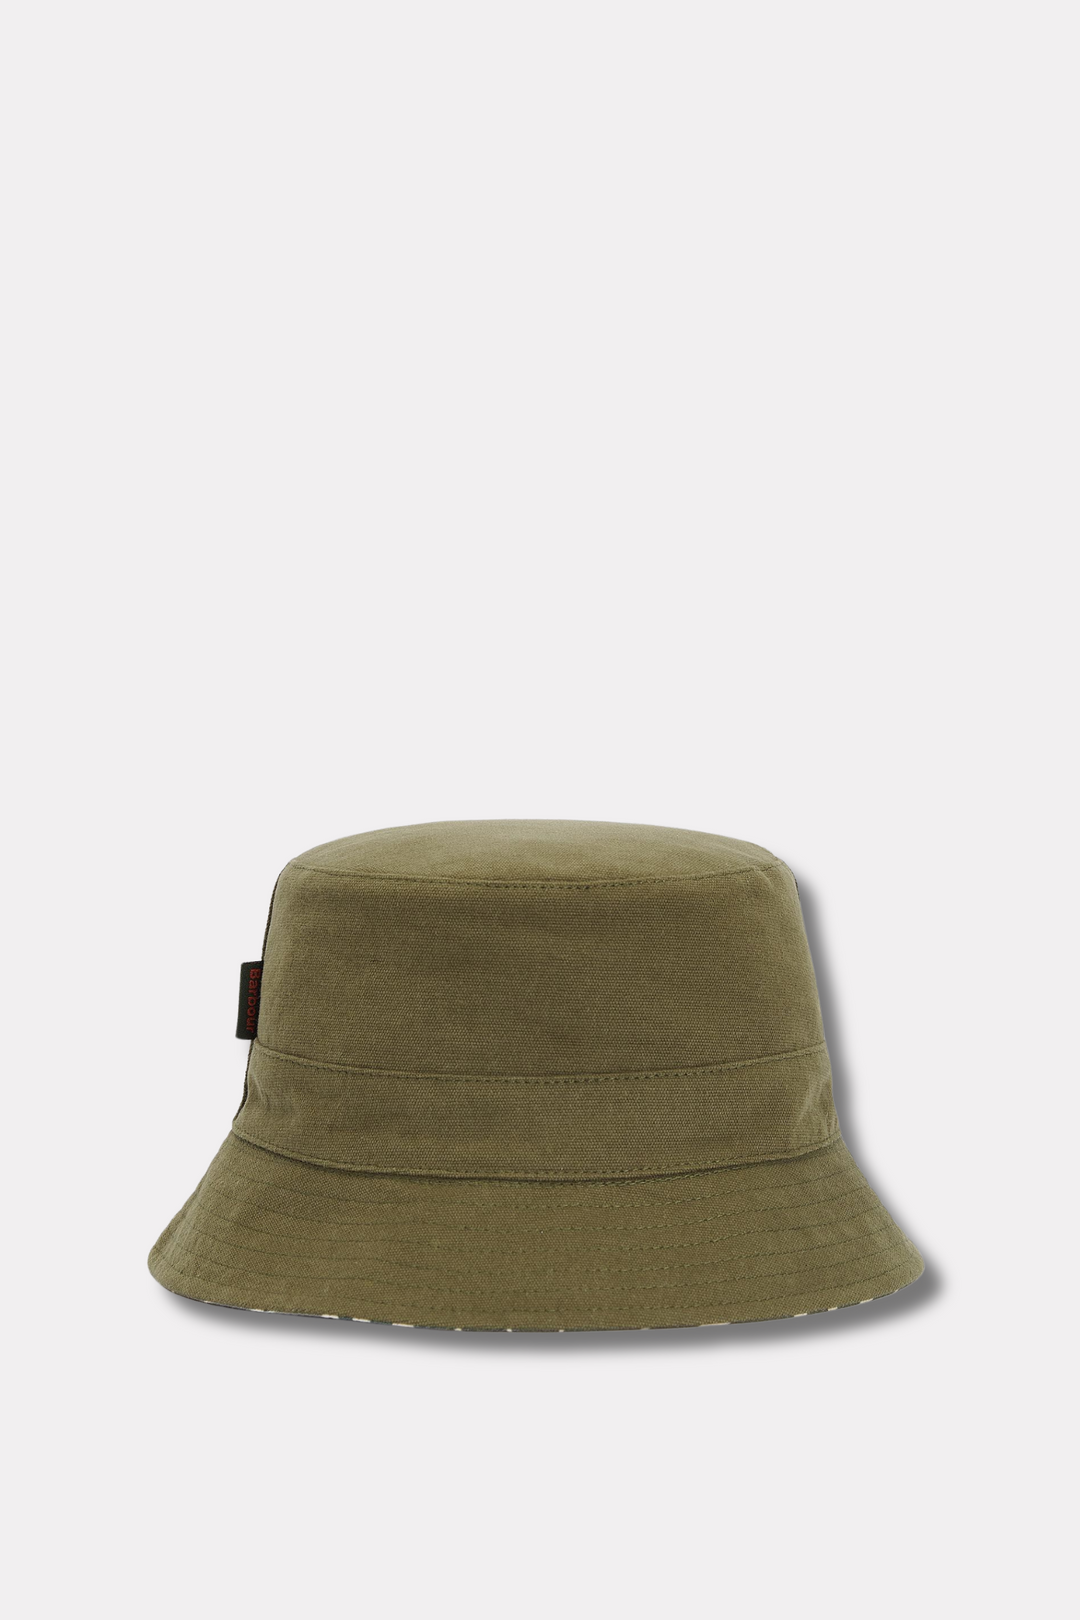 Cornwall Reversible Bucket Hat Olive